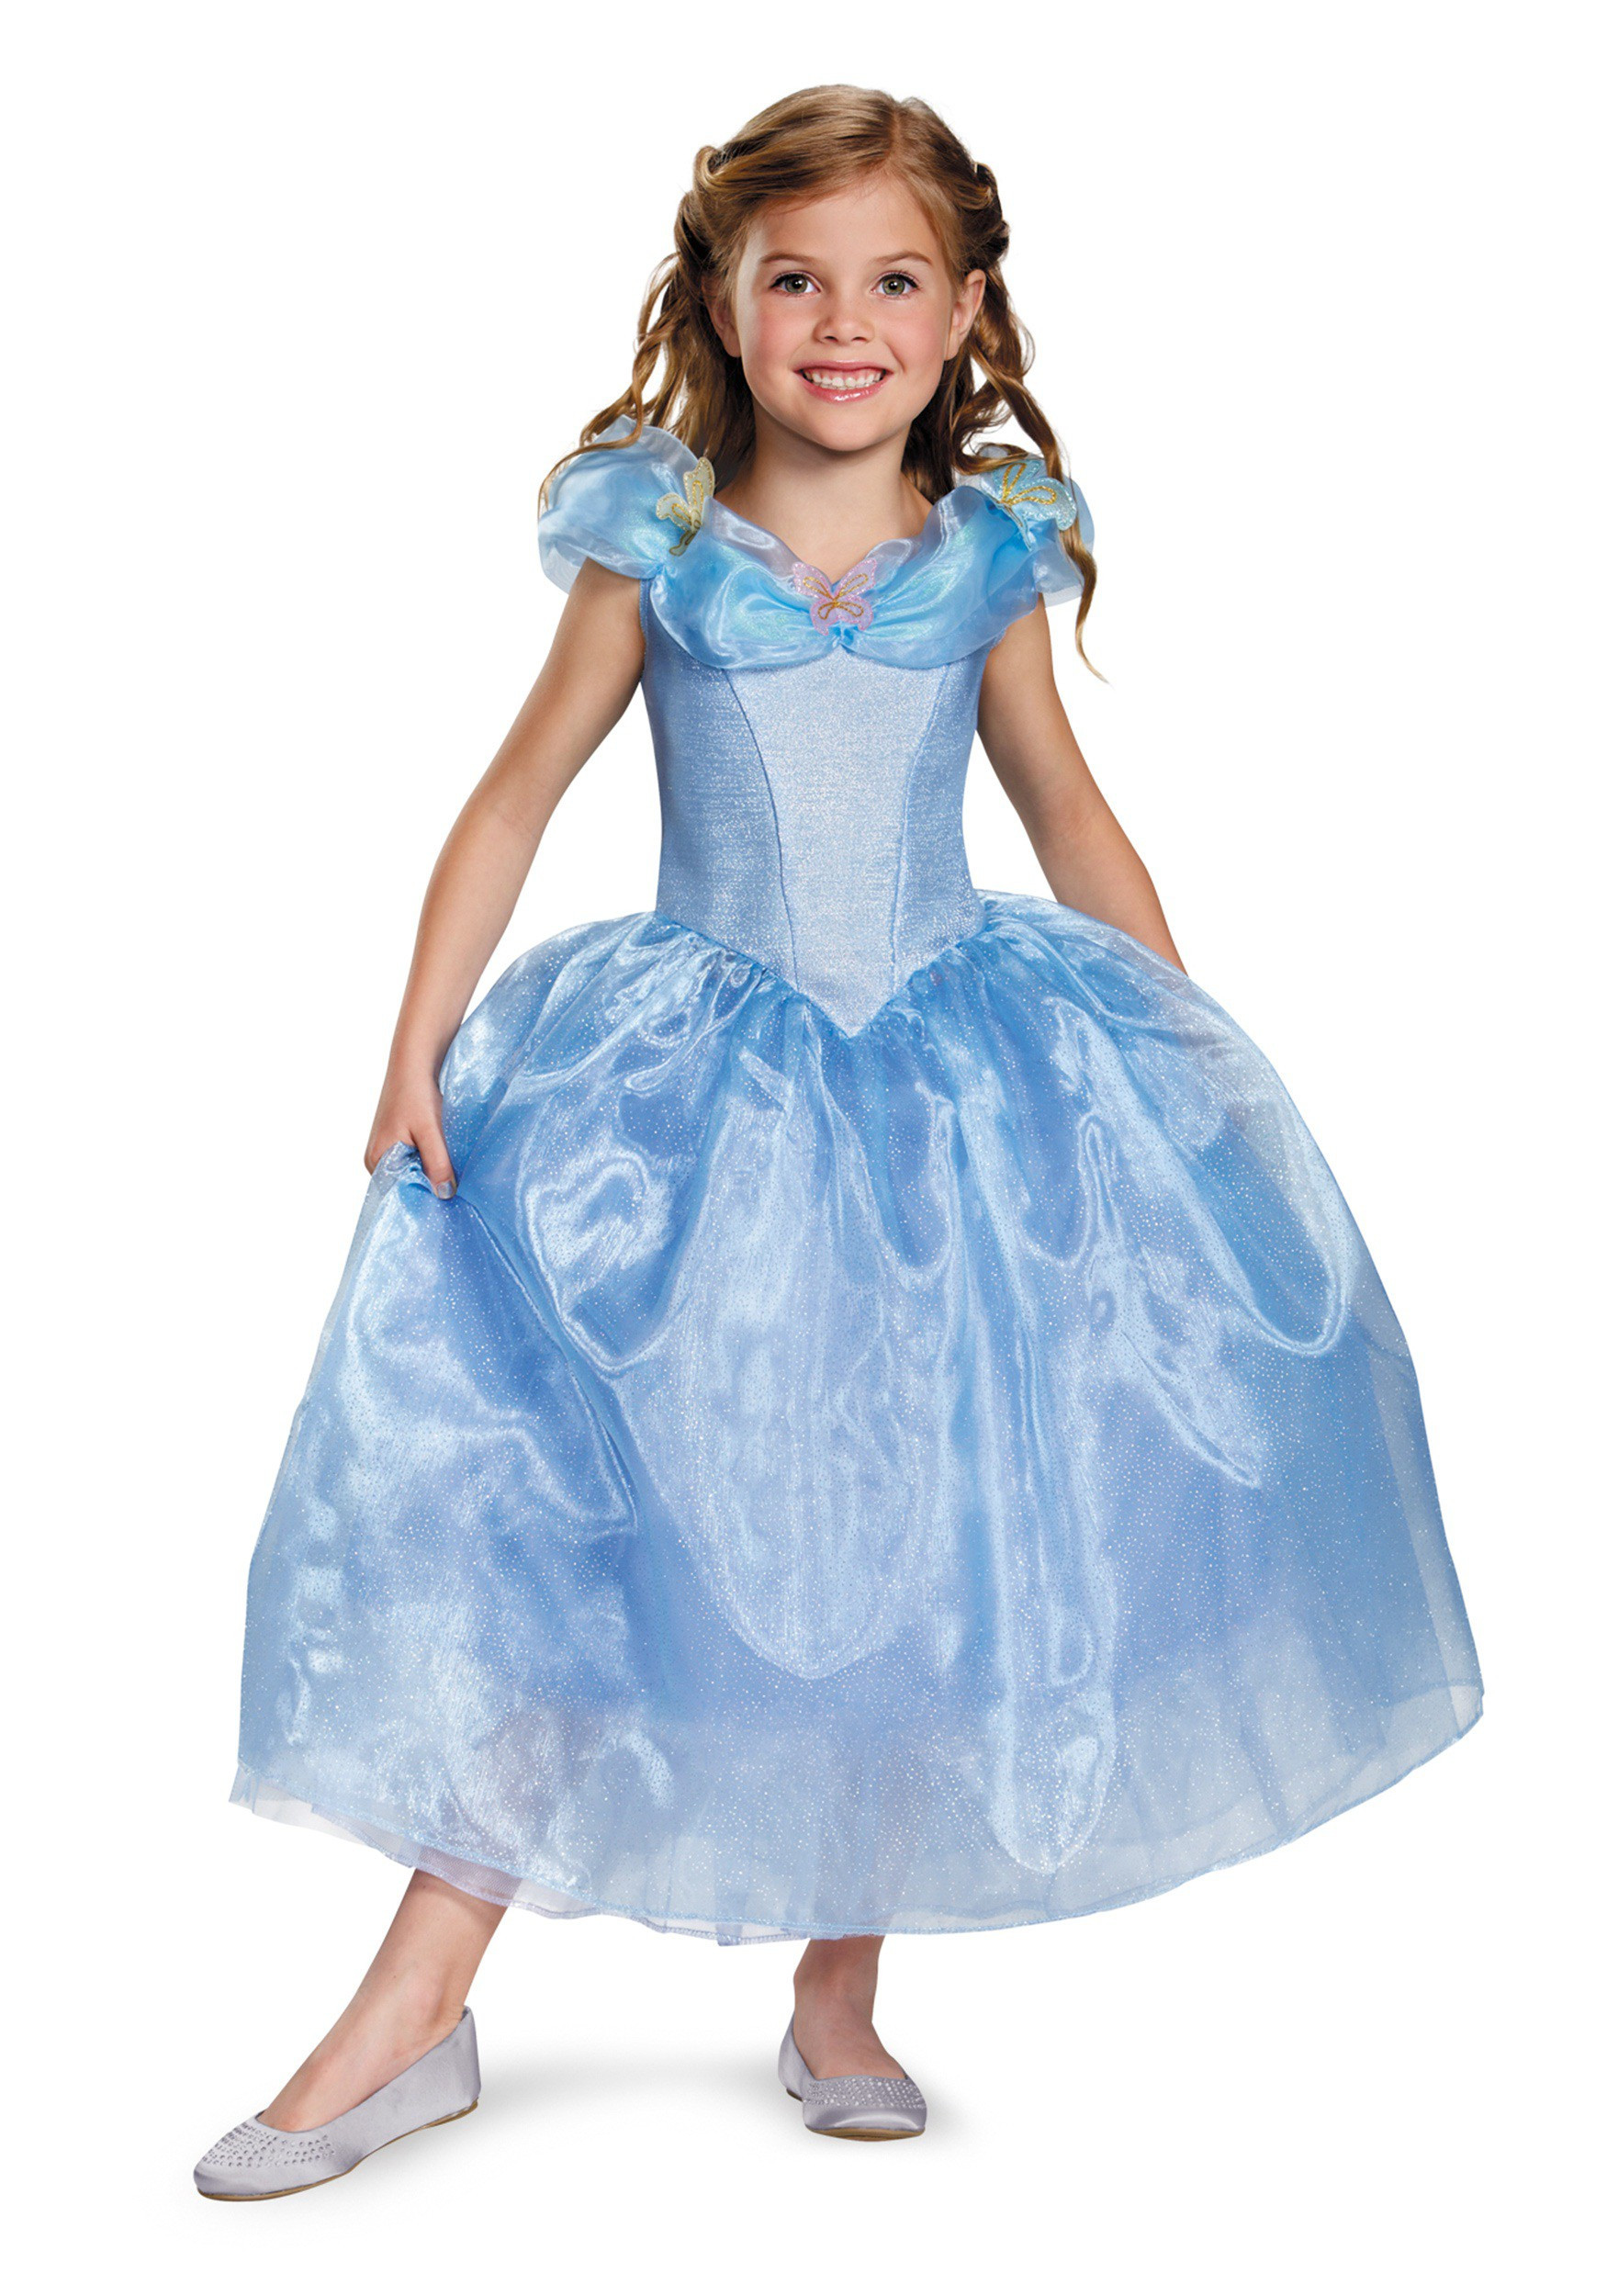 Cinderella DIY Costumes
 Girls Deluxe Cinderella Movie Costume